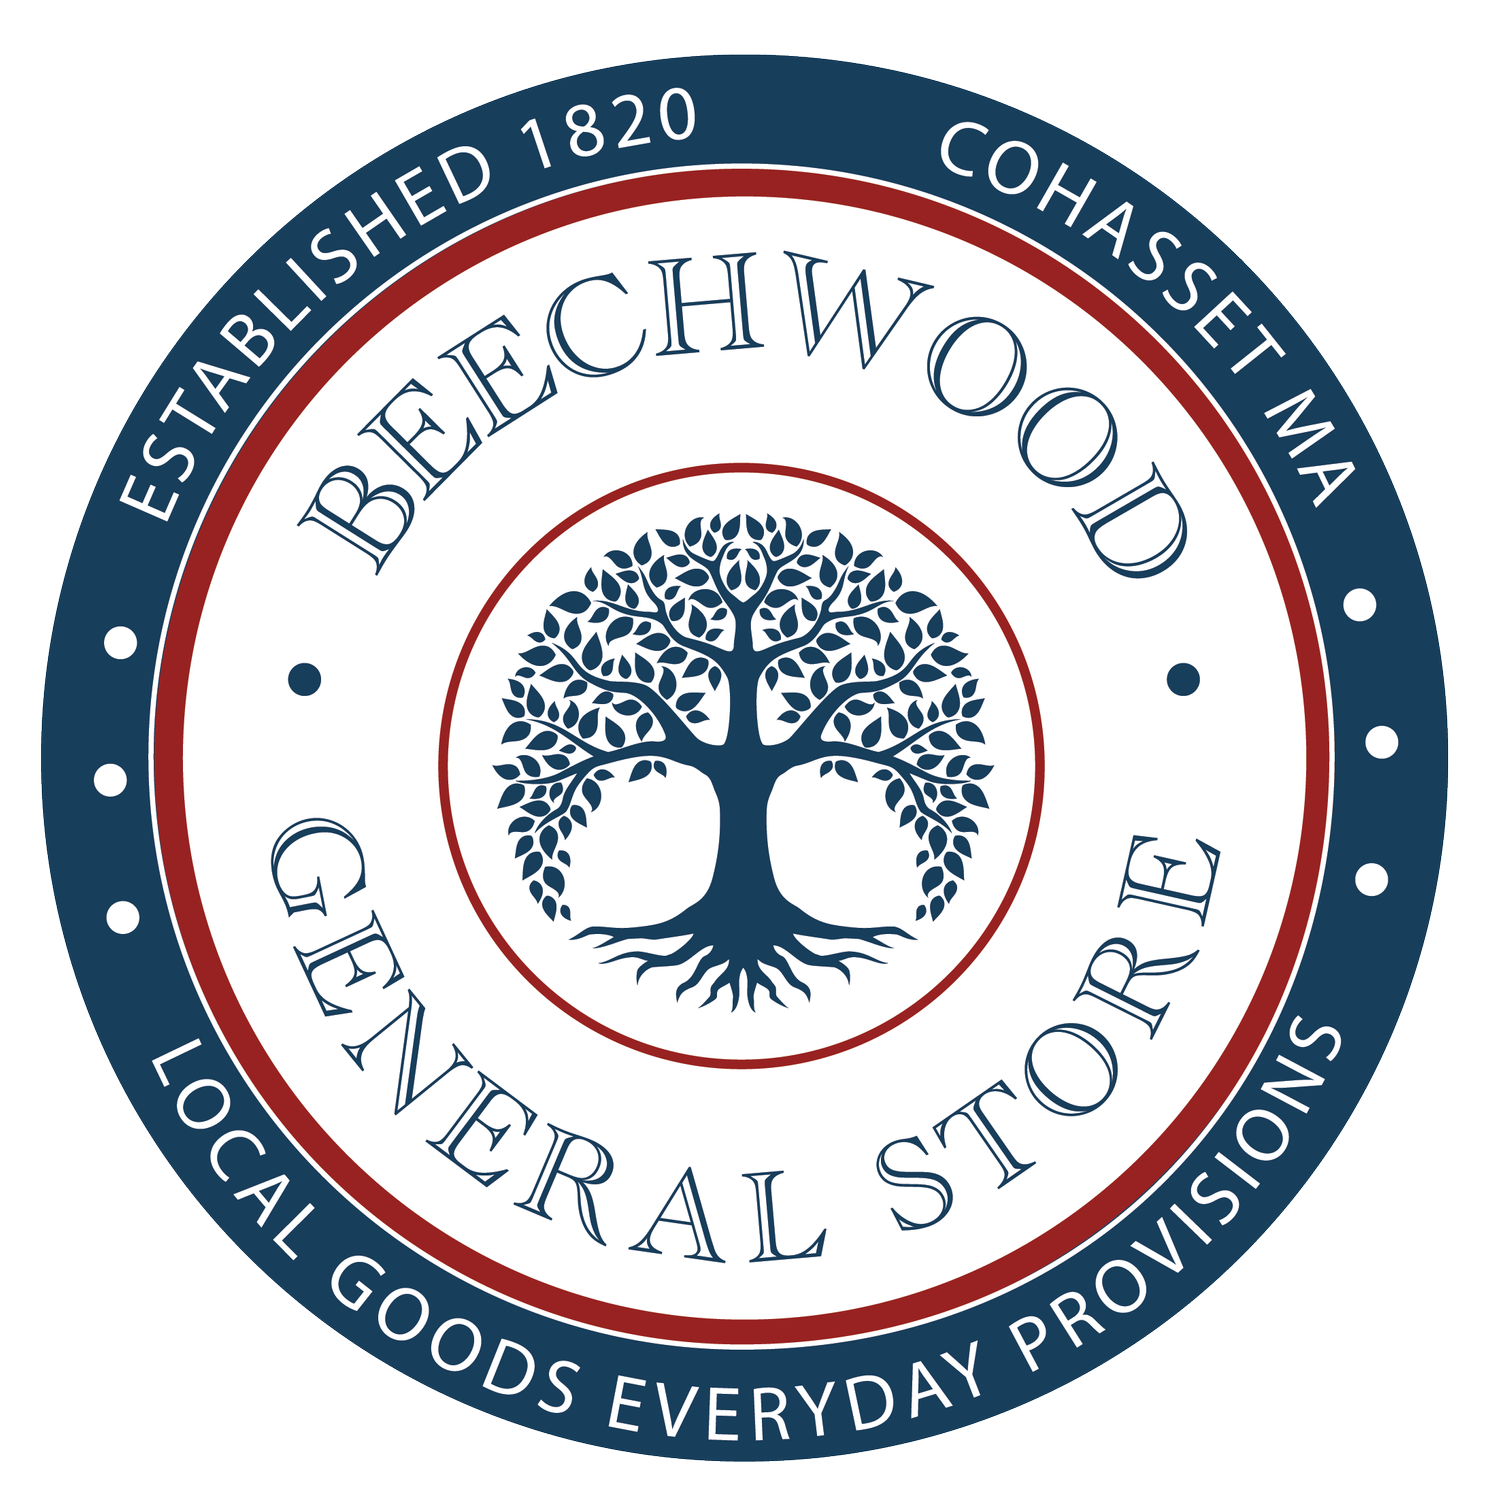 Beechwood General Store